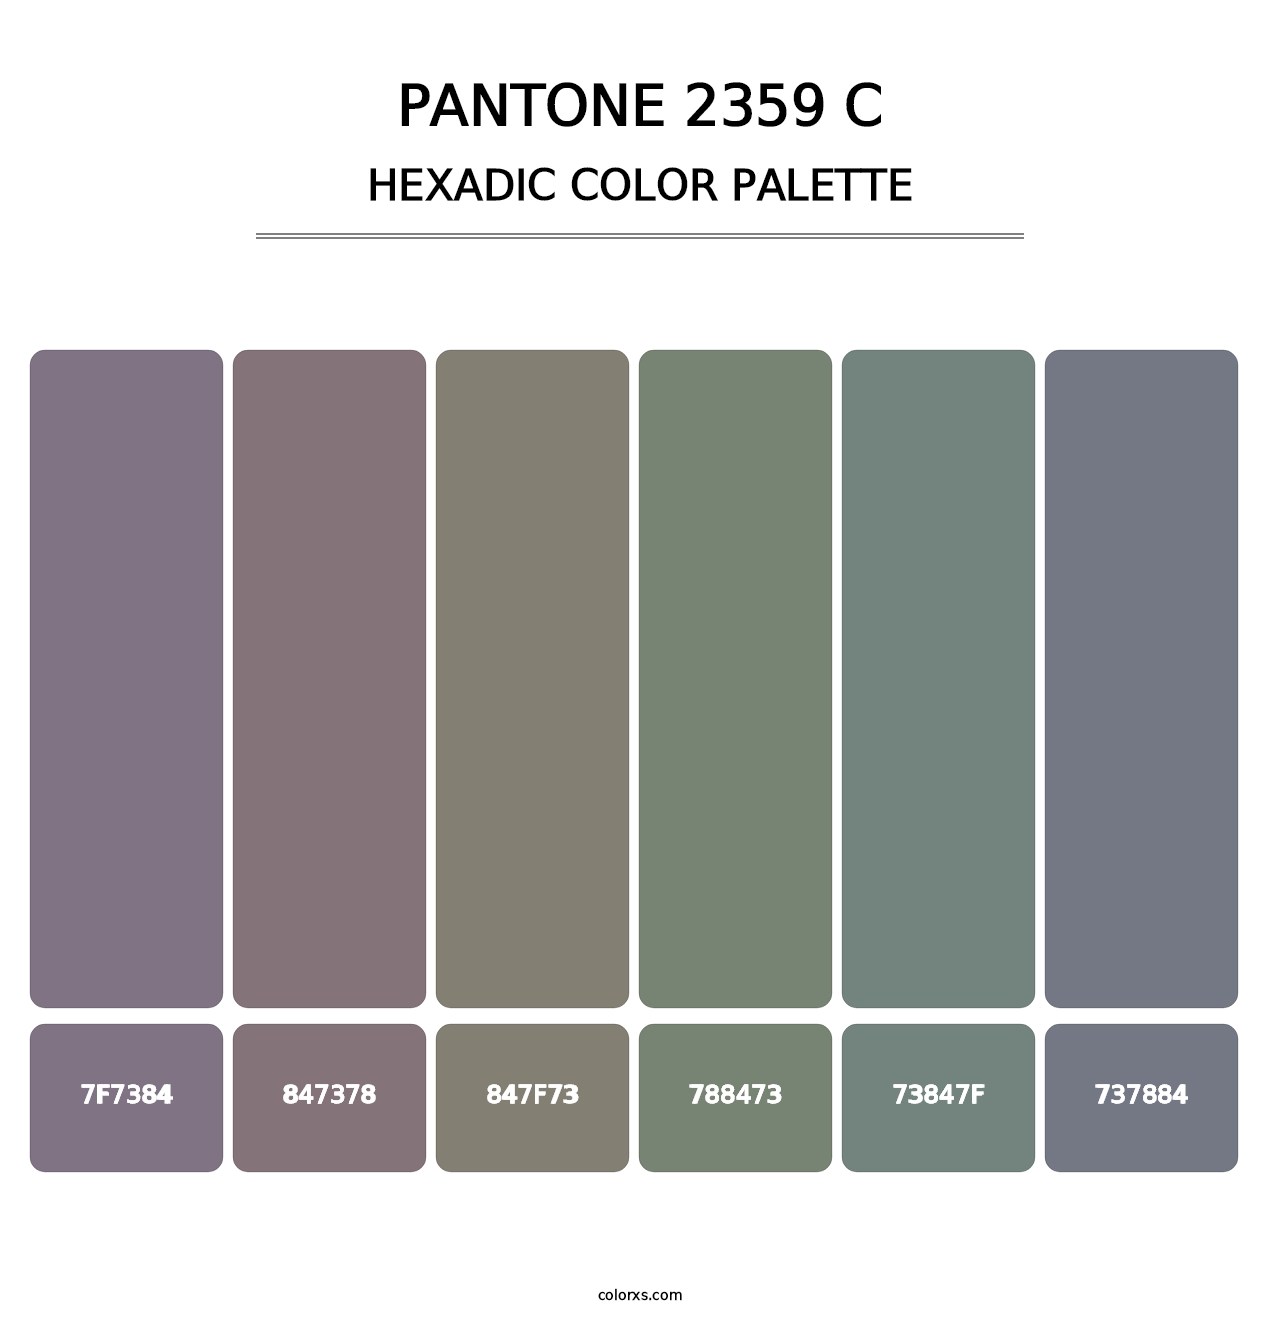 PANTONE 2359 C - Hexadic Color Palette